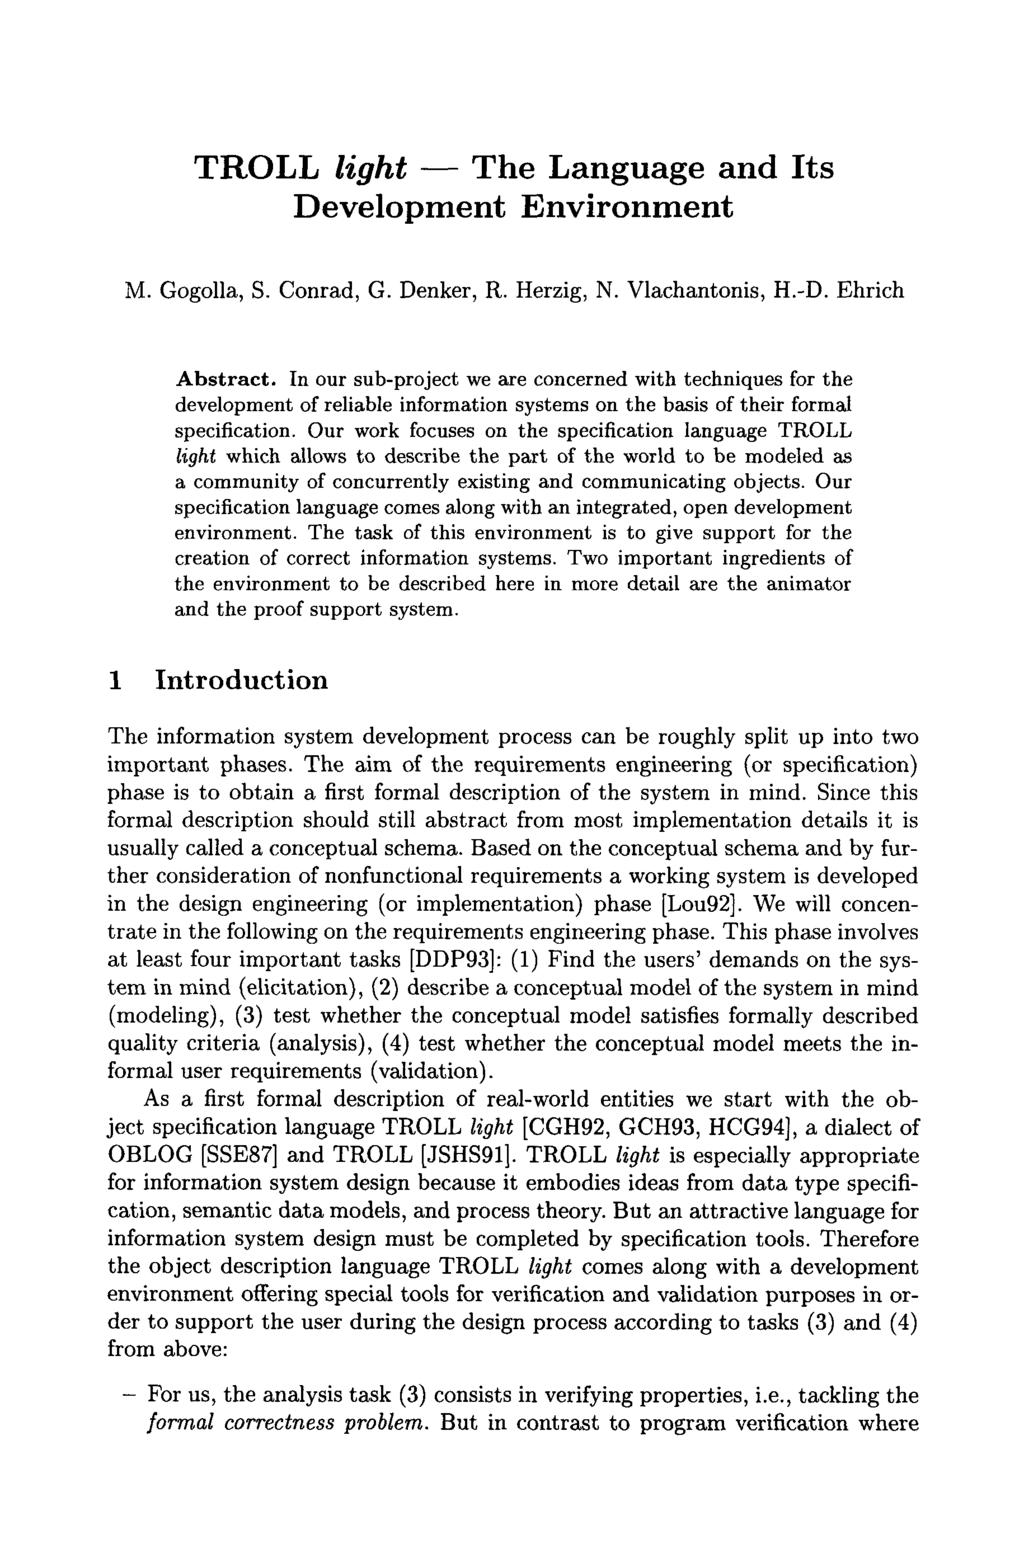 TROLL light -- The Language and Its Development Environment M. Gogolla, S. Conrad, G. Denker, R. Herzig, N. Vlachantonis, H.-D. Ehrich Abstract.